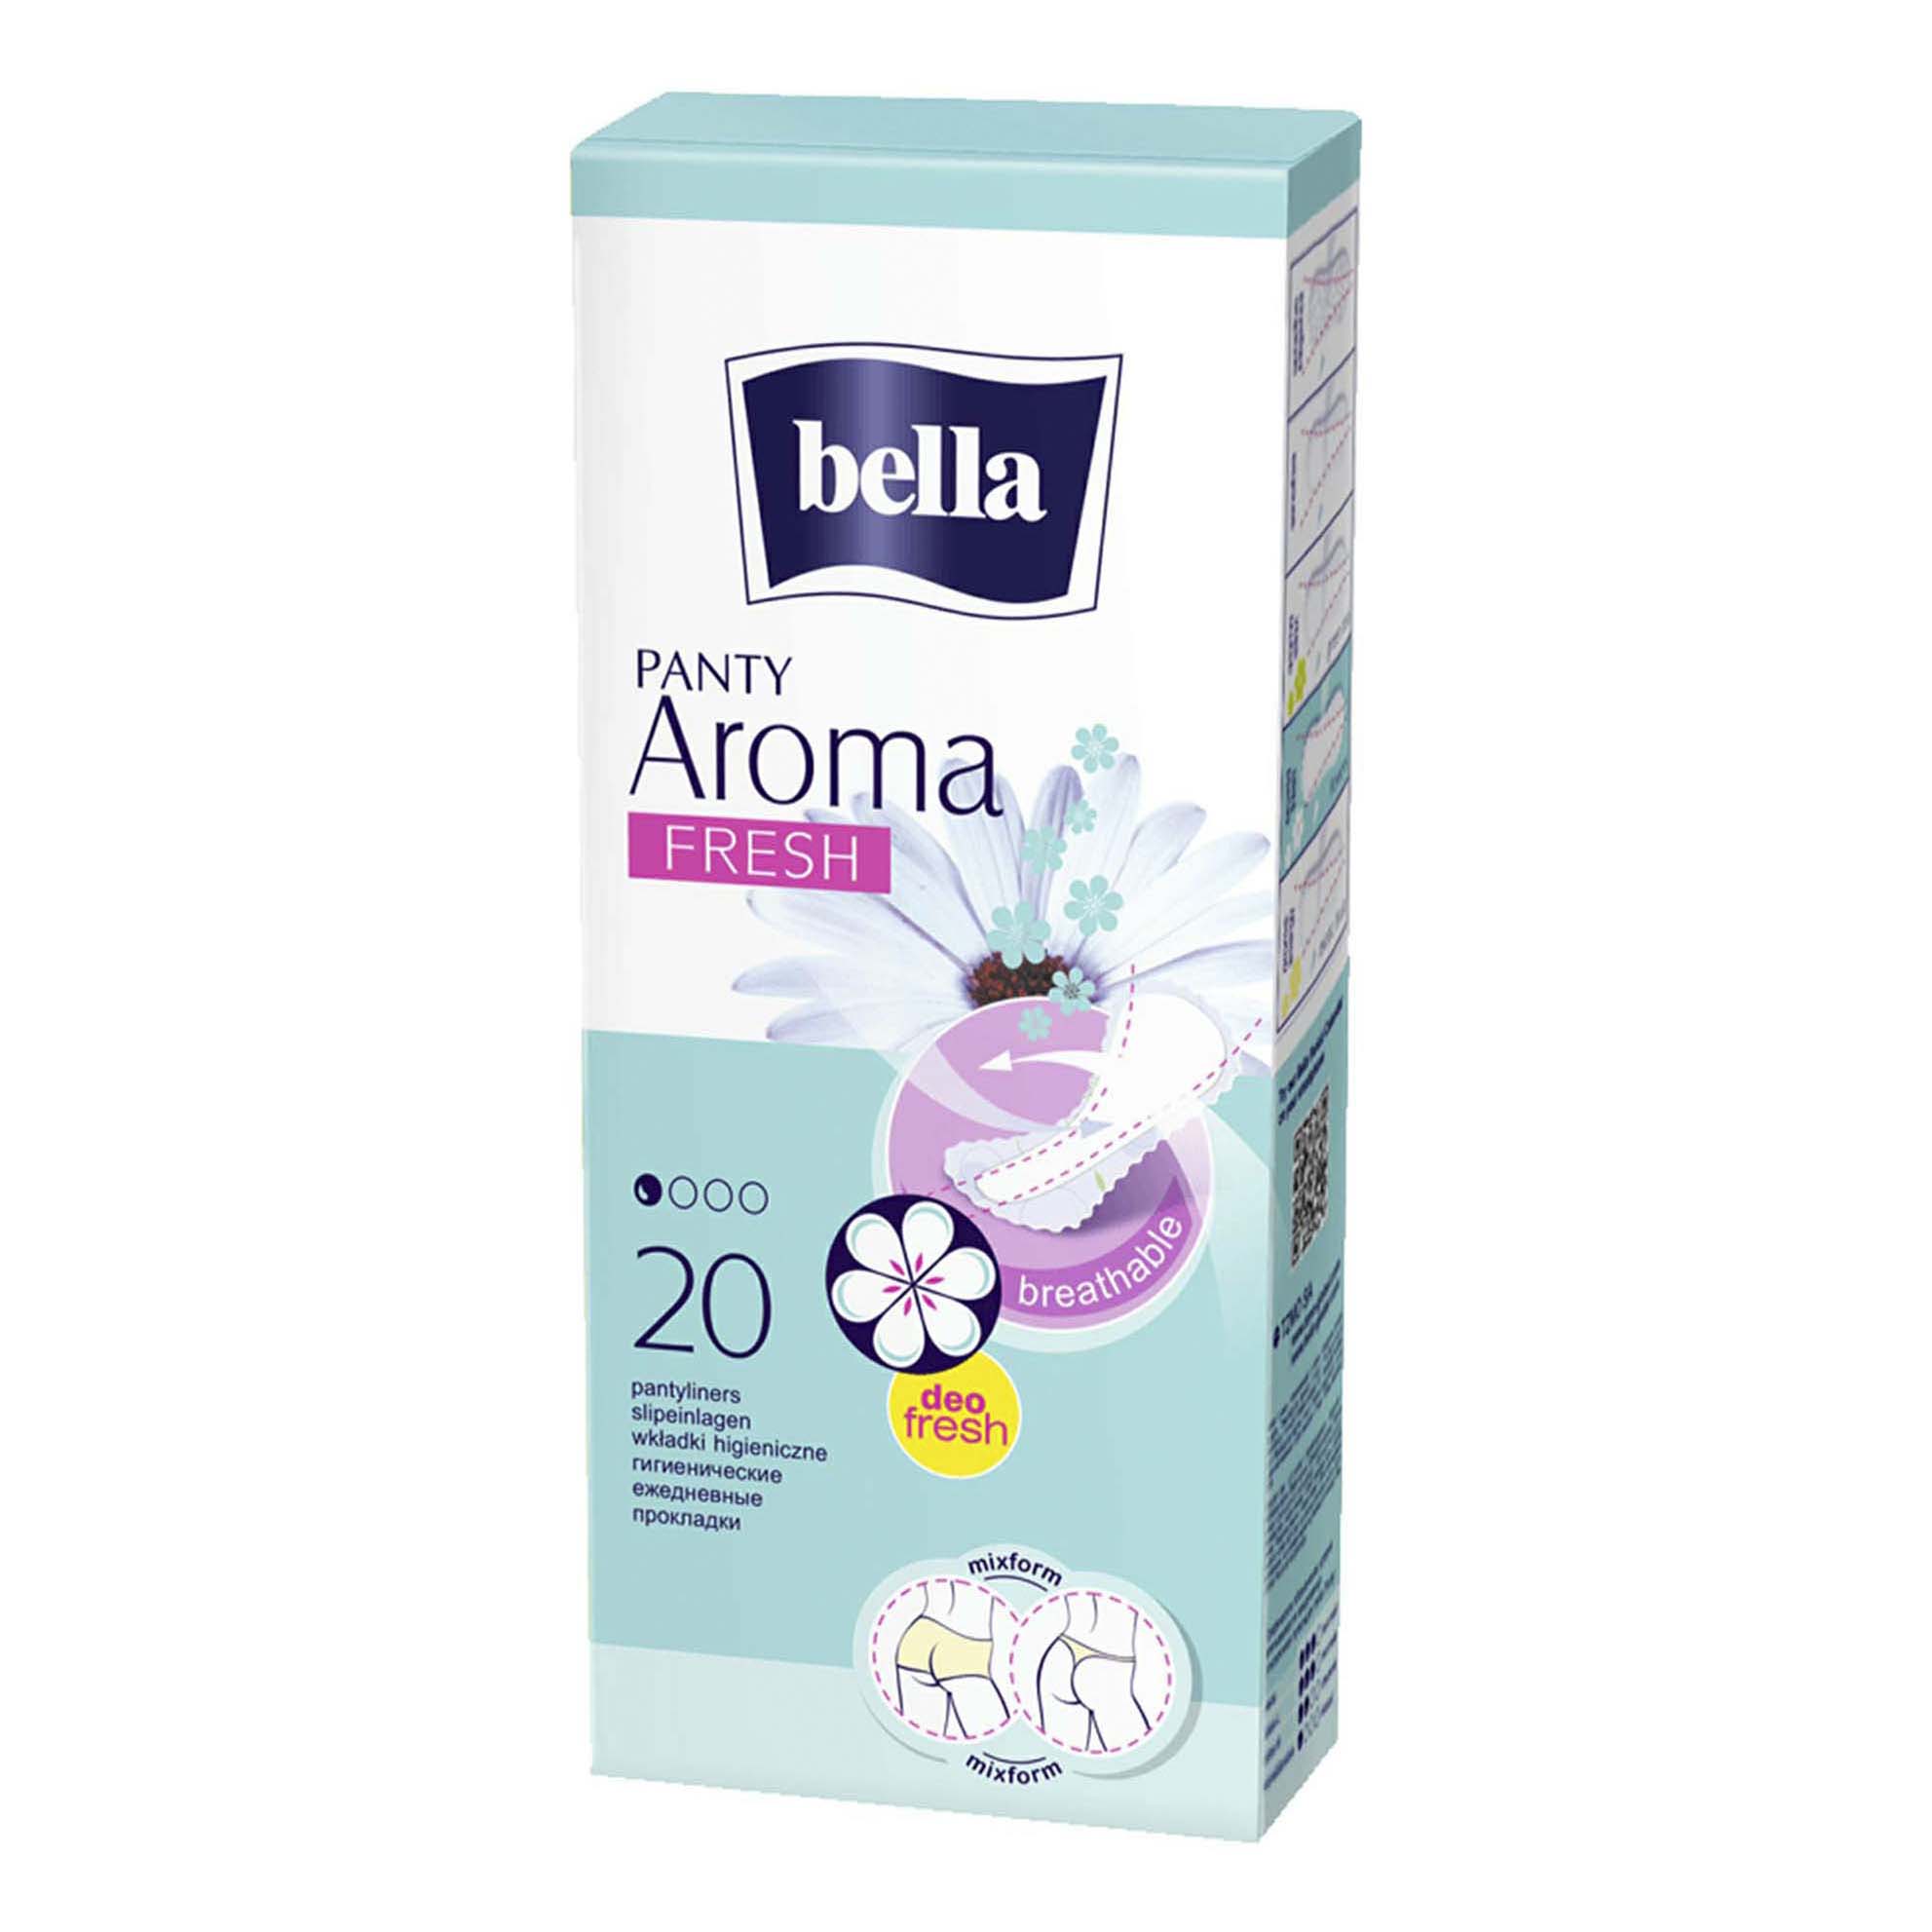 Прокладки Bella Panty aroma fresh ежедневные 20 шт bella bella прокладки ежедневные супертонкие panty ultra l